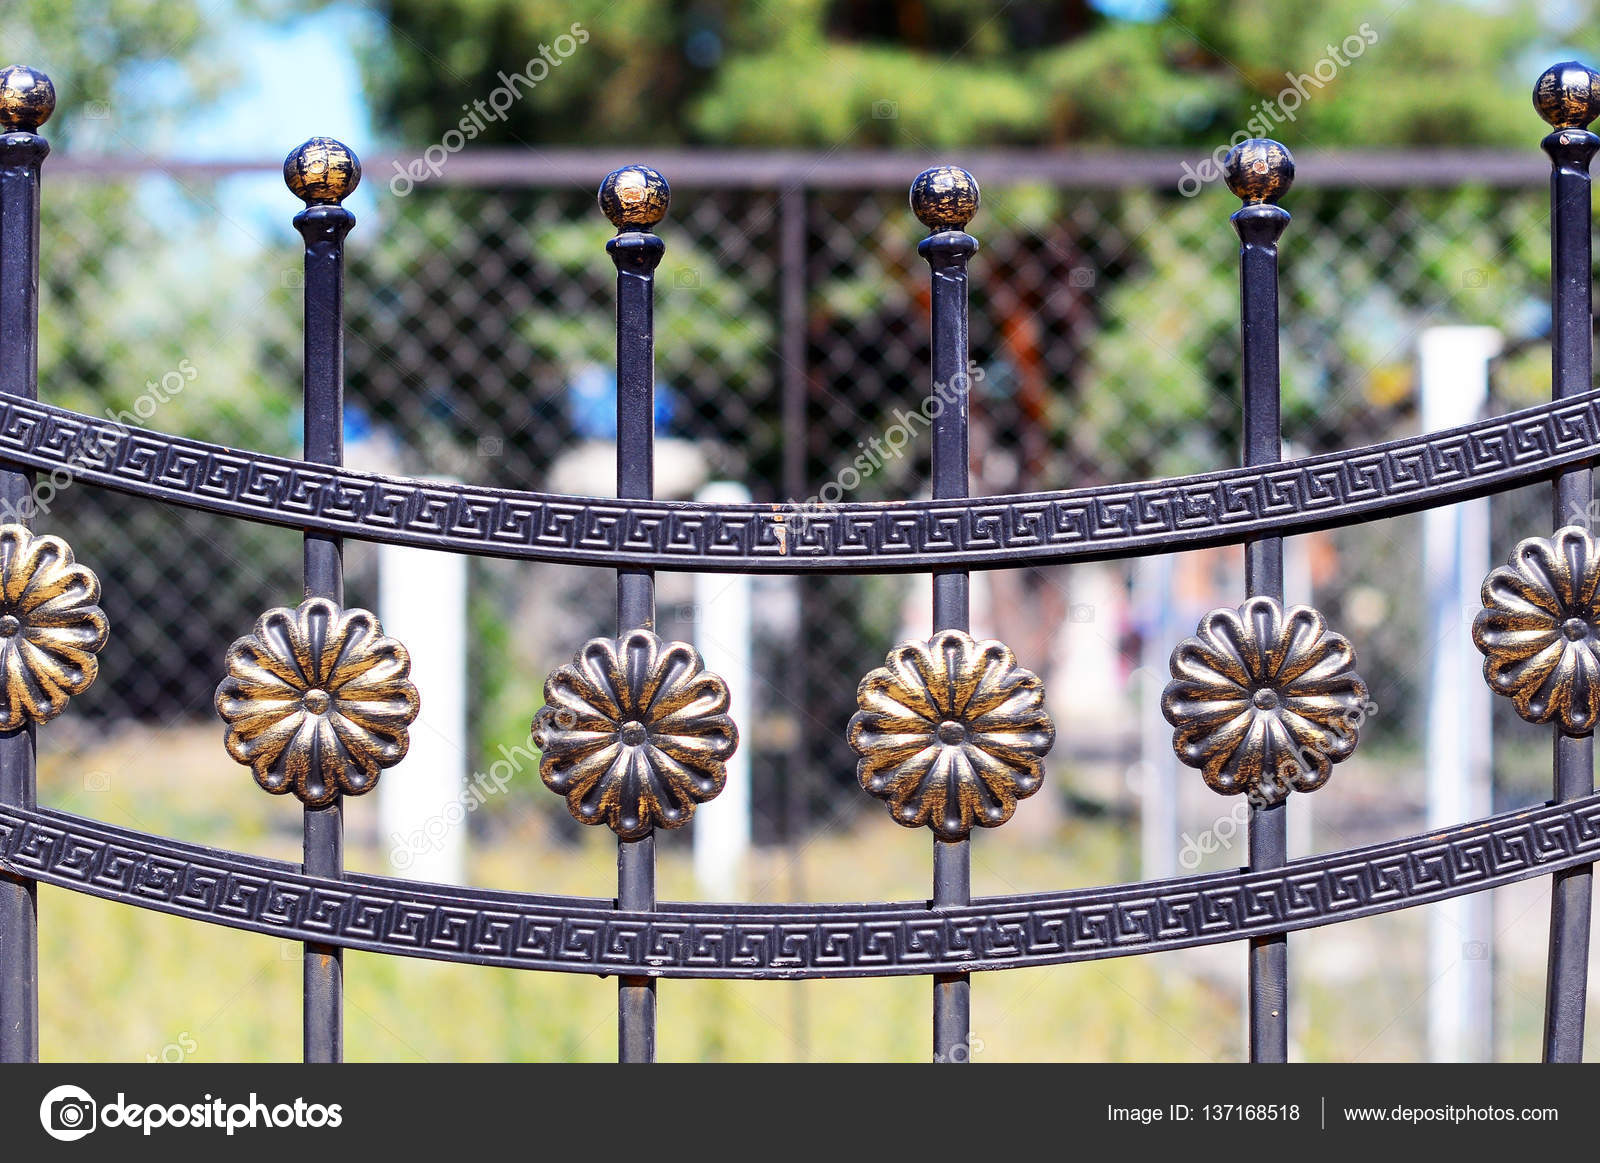 Image Of A Decorative Cast Iron Fence